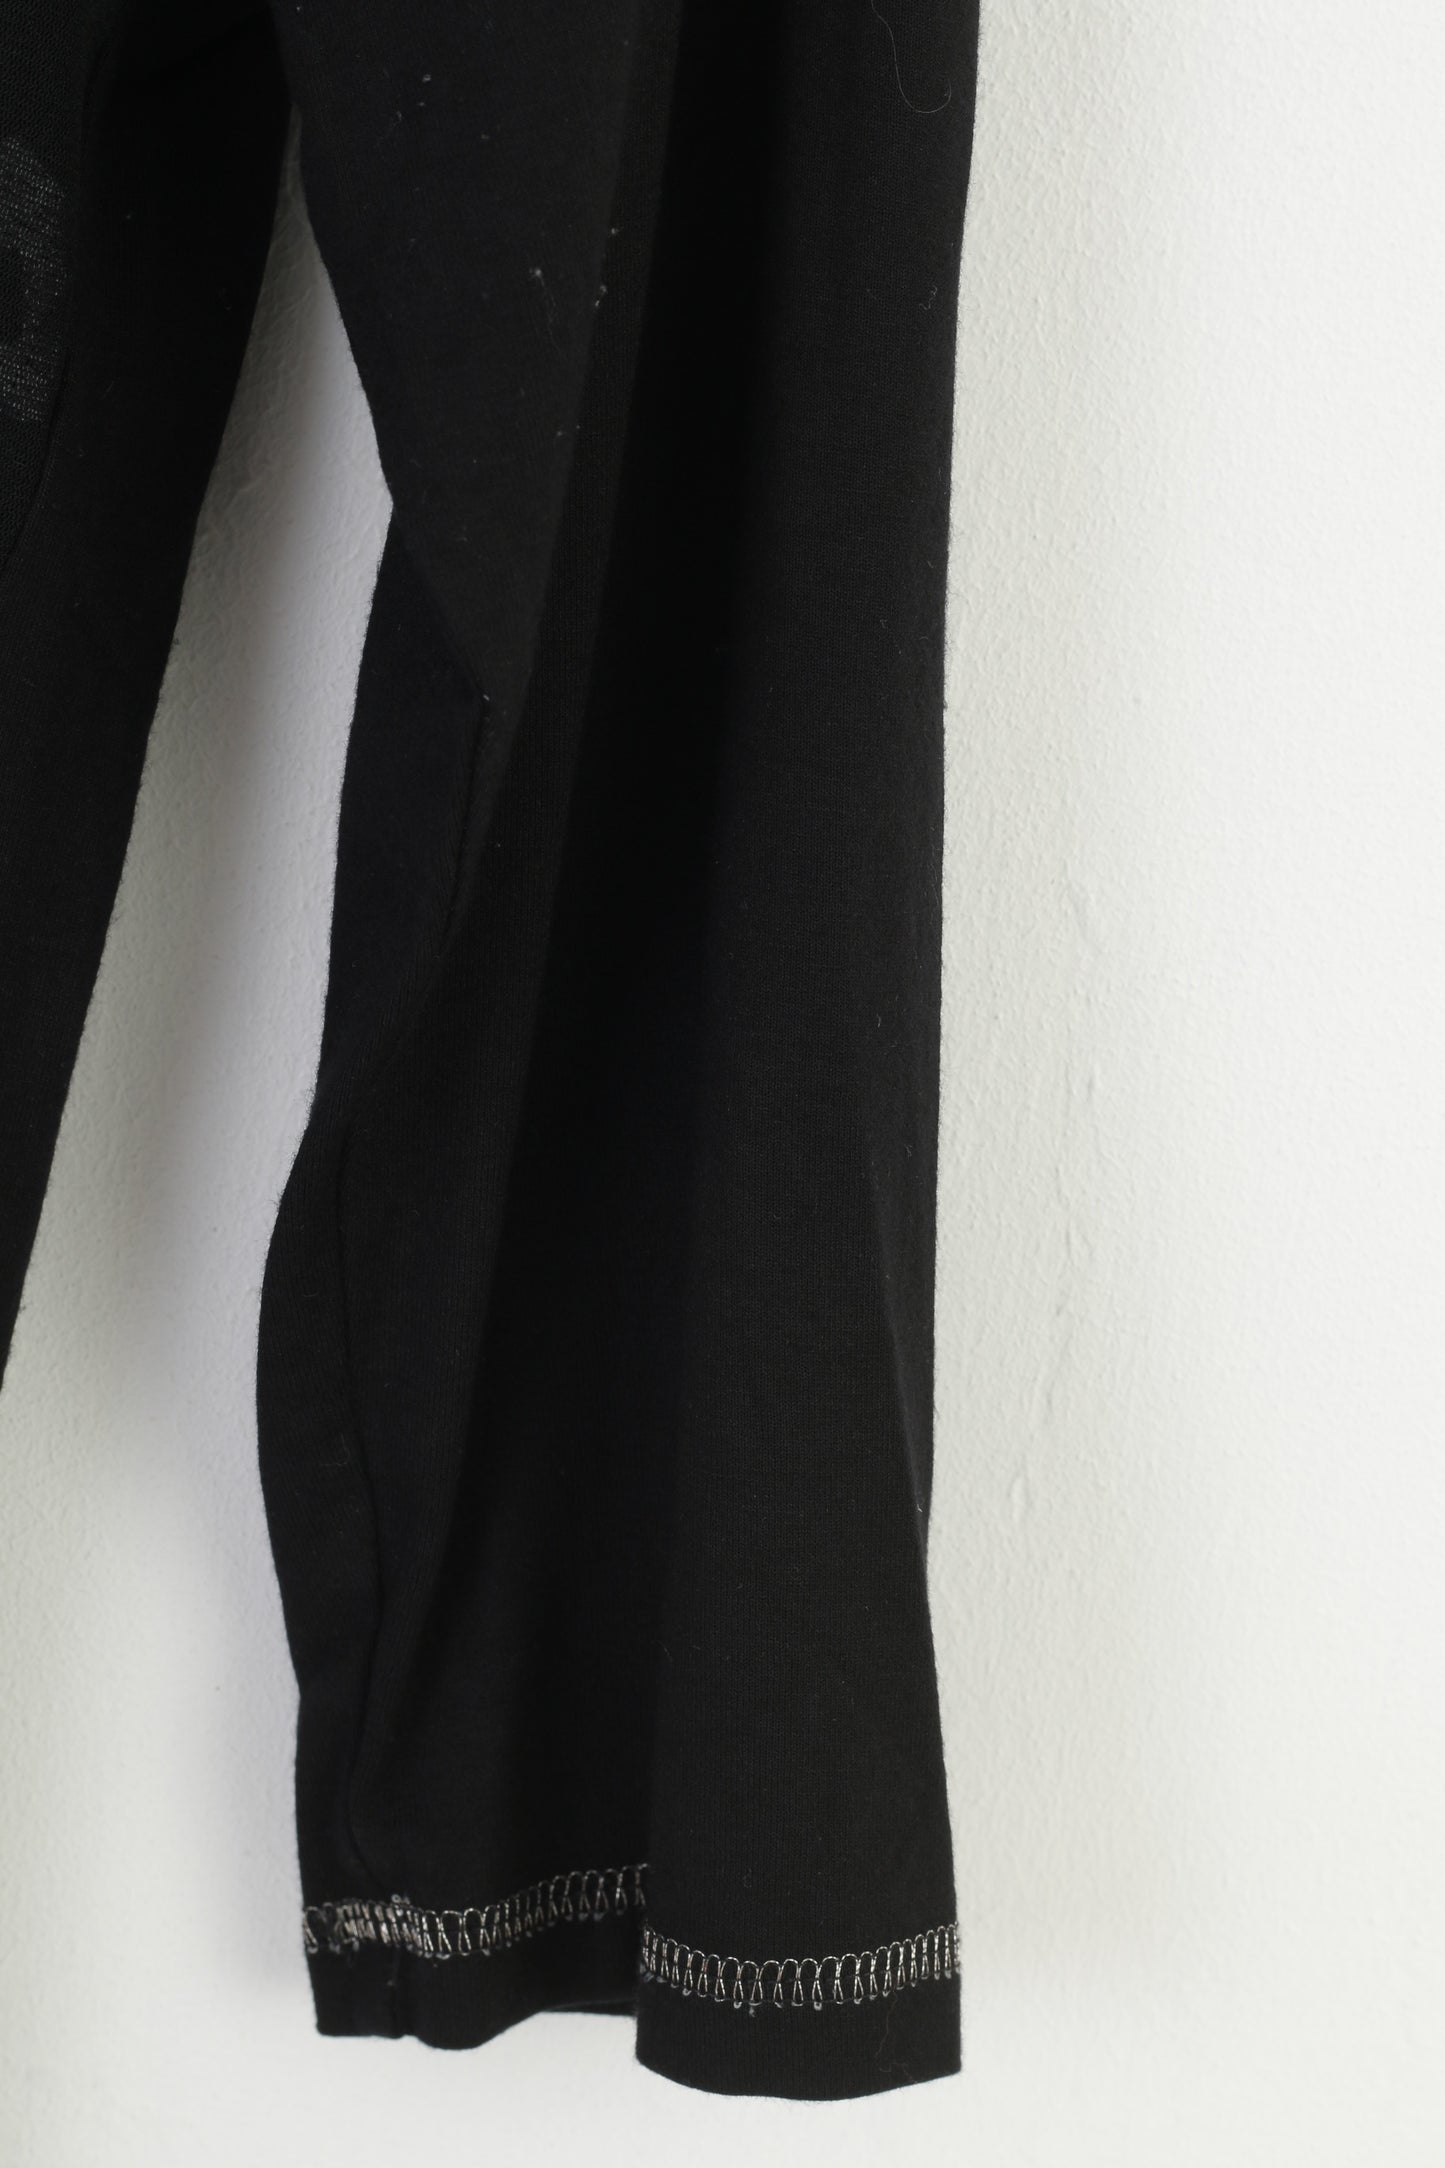 Notiz Women S  Shirt Long Sleeve Black Mesh Graphic Crew Neck Vintage Stretch Top